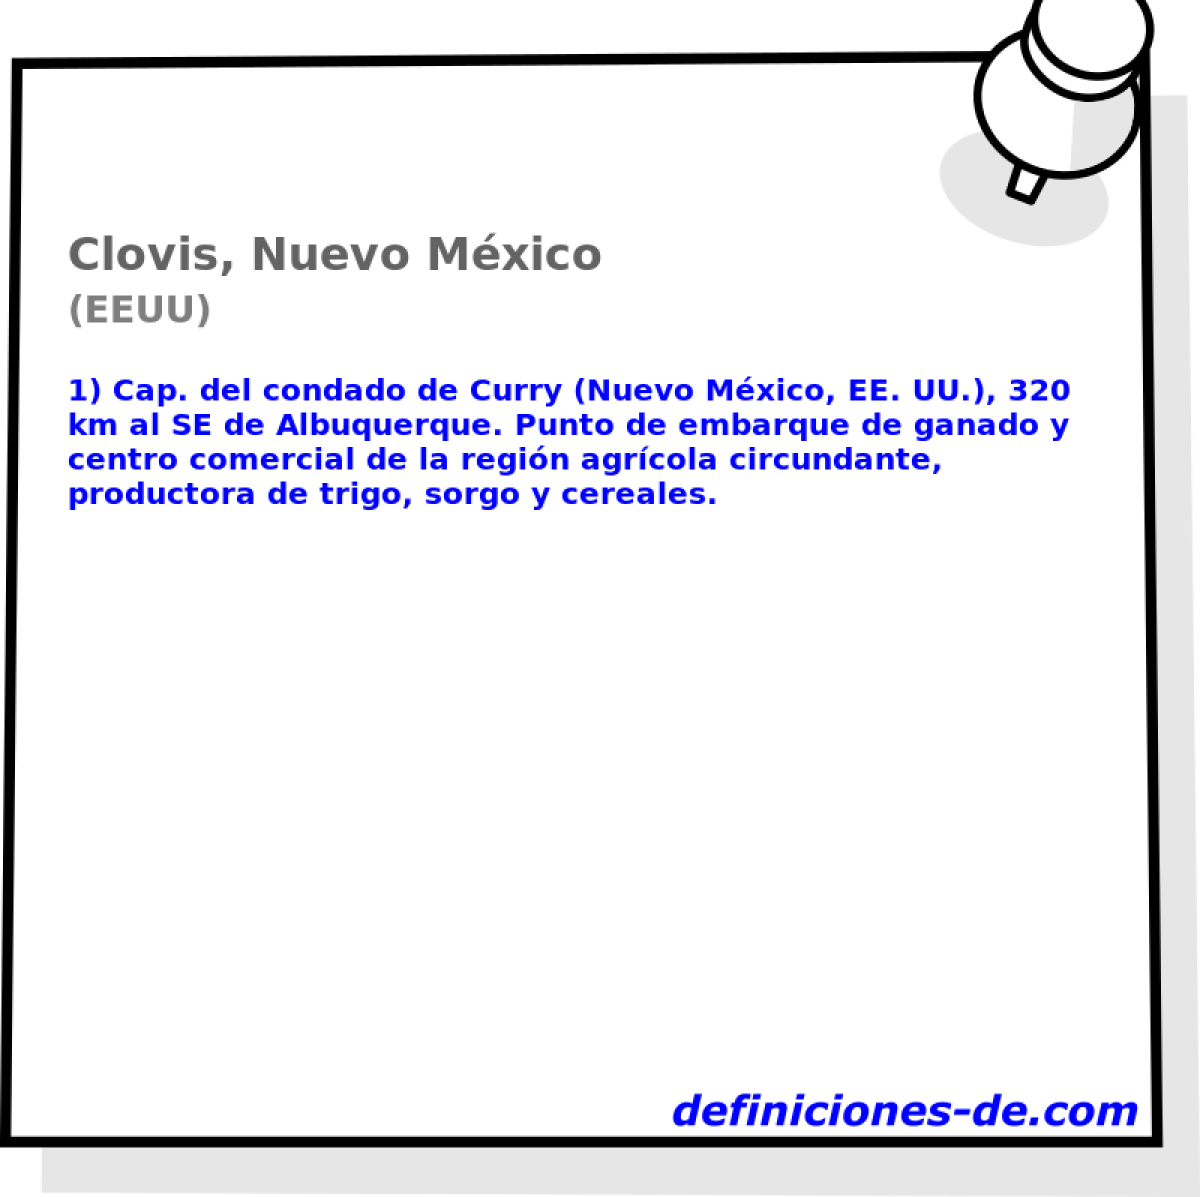 Clovis, Nuevo Mxico (EEUU)